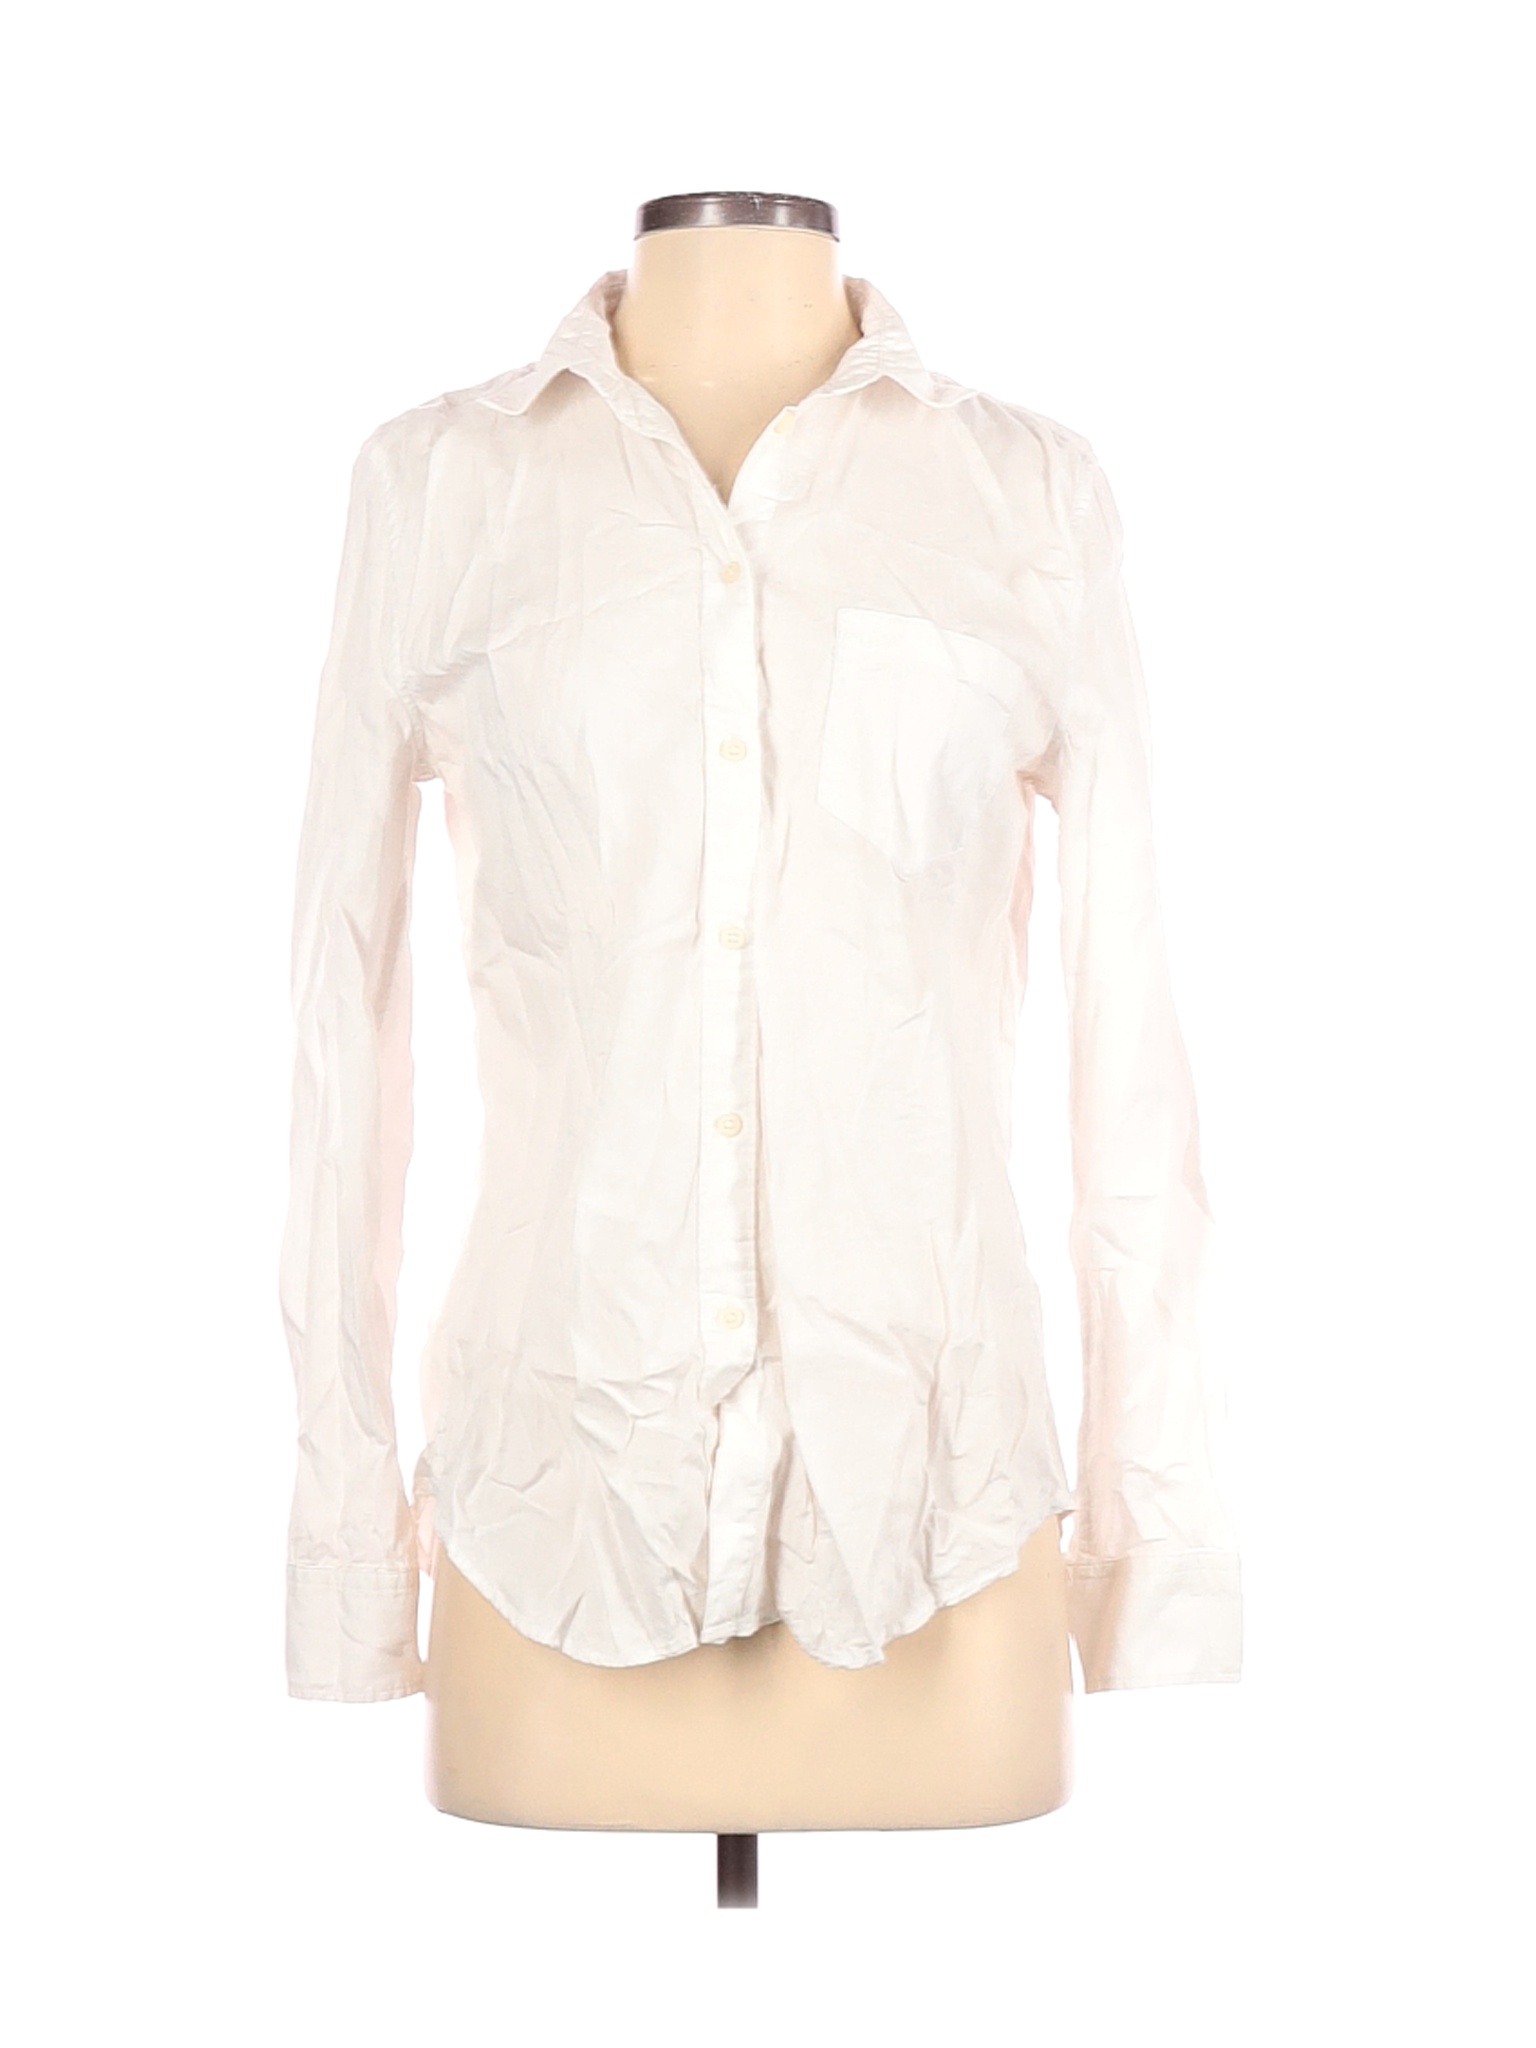 Gap Women Ivory Long Sleeve Button-Down Shirt S | eBay